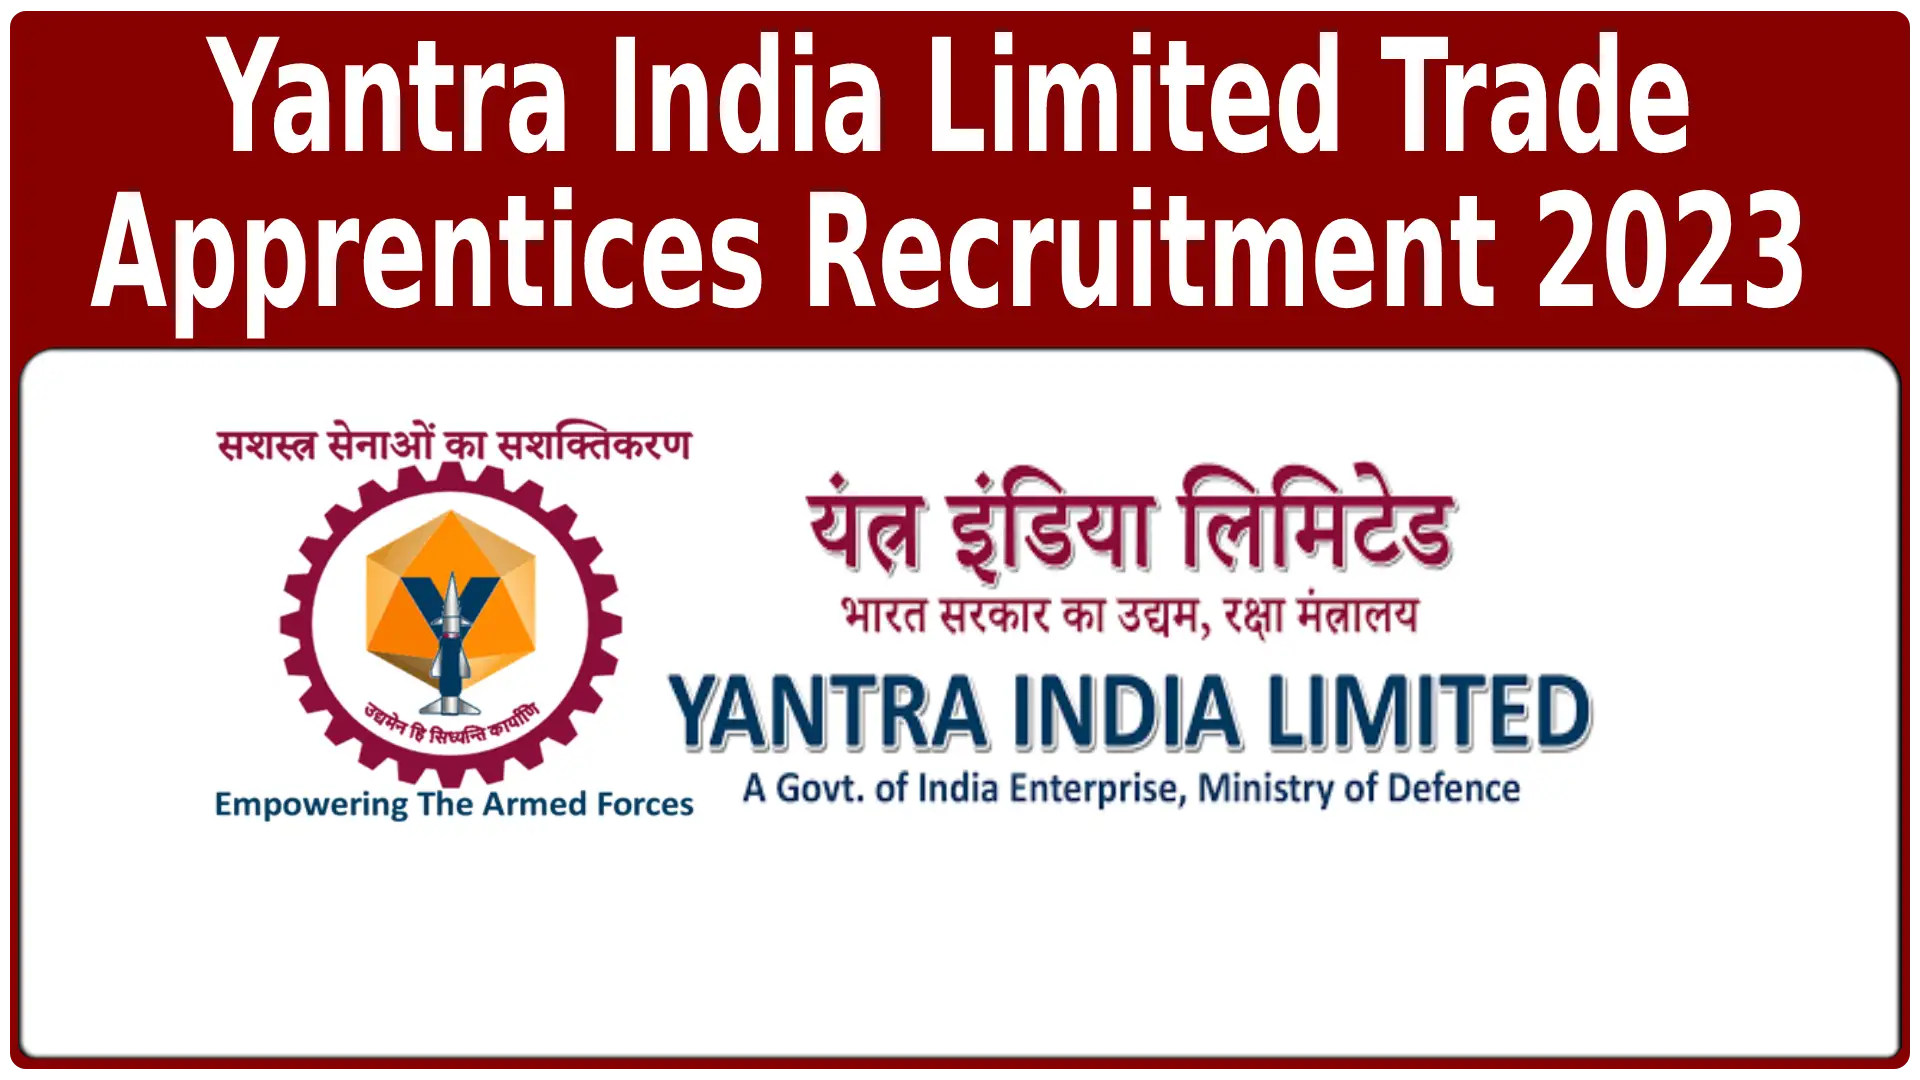 Yantra India Limited Trade Apprentices Recruitment 2023